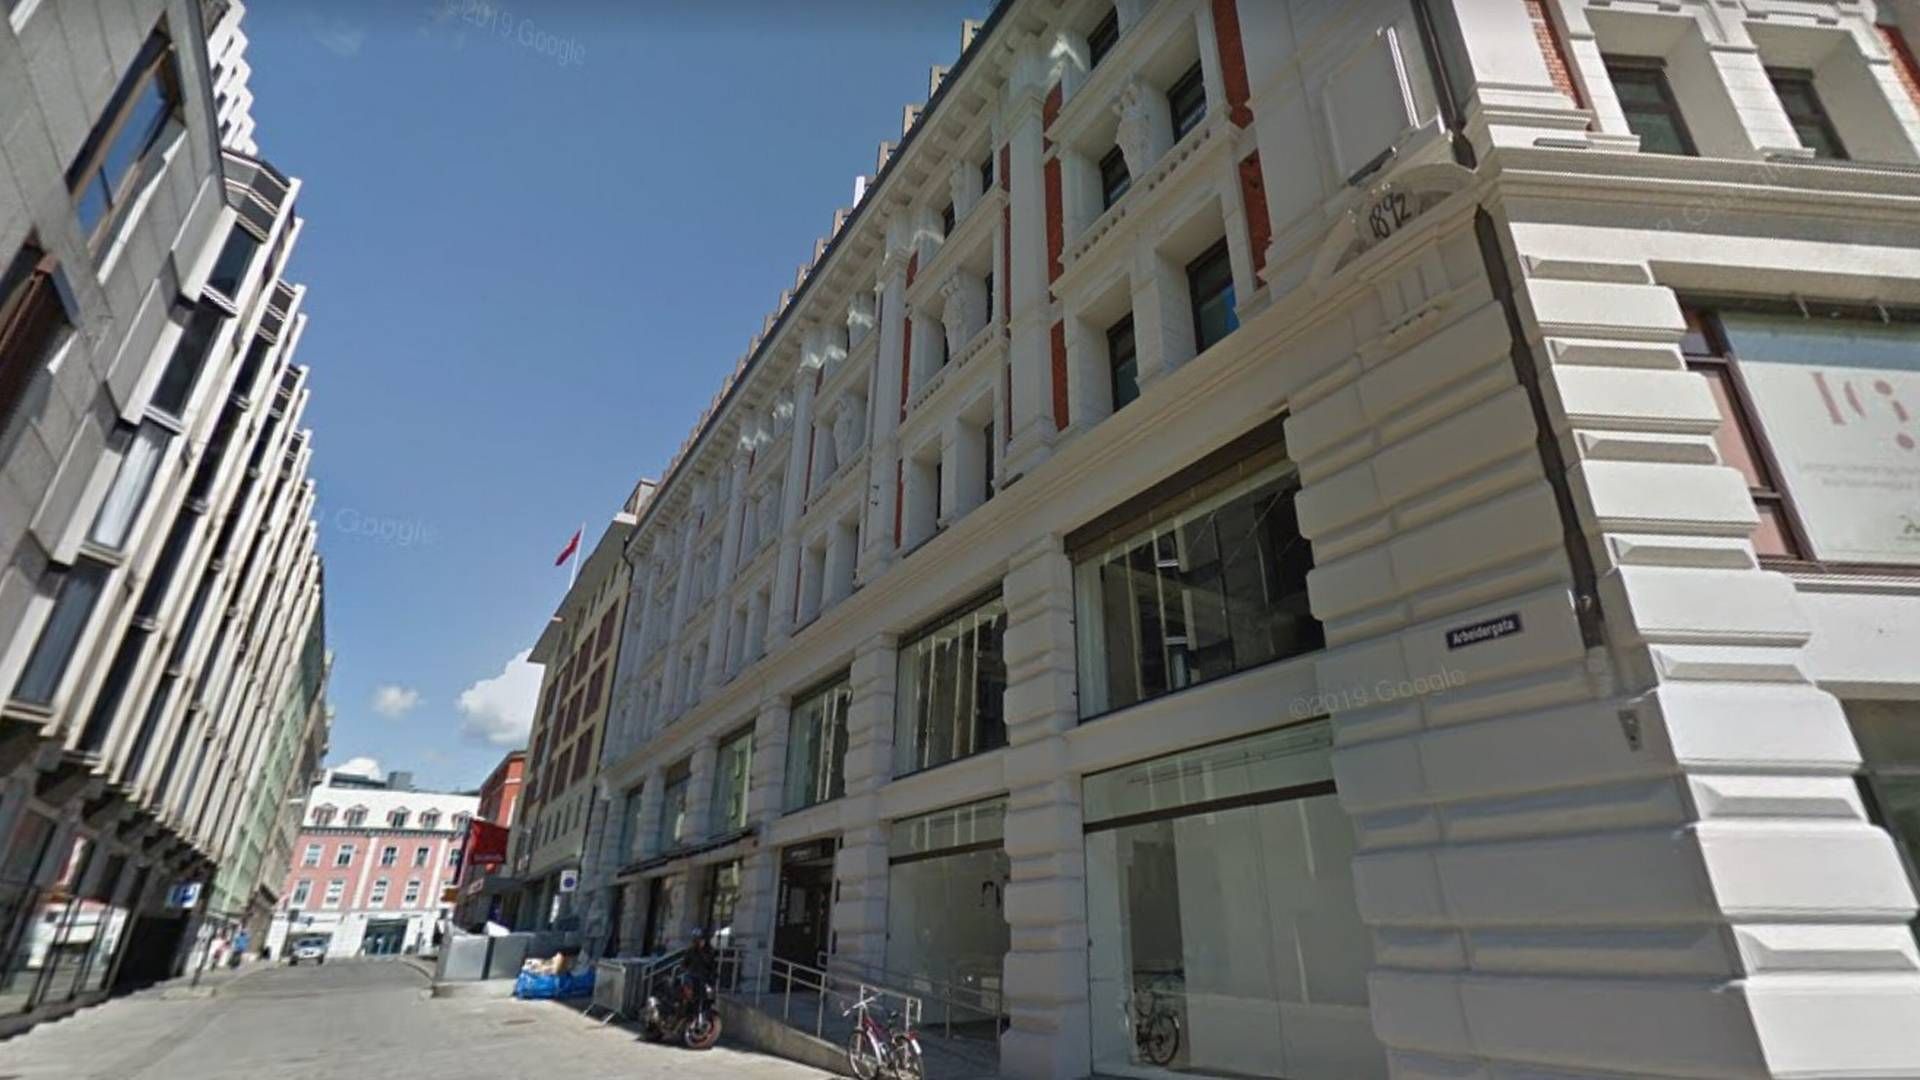 Advisio holder til i Lille Grensen 7 i Oslo. | Foto: Google Street View